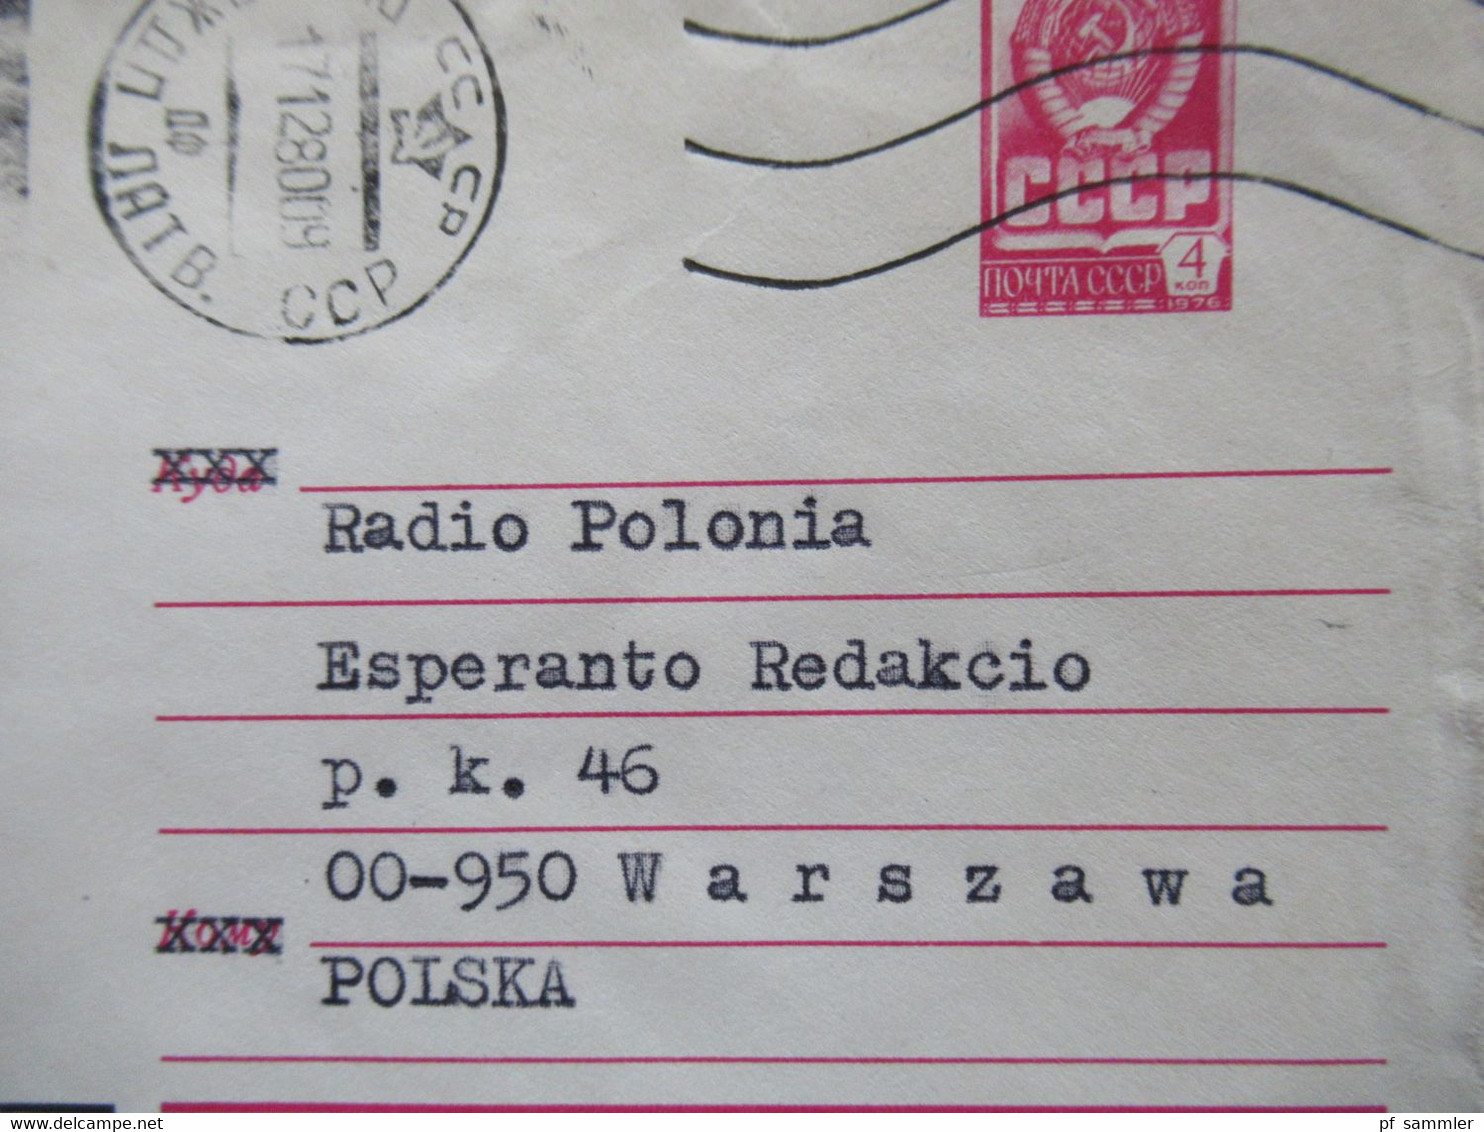 Russland / Lettland 1980 GA Aus Riga Latvia SSR/USSR Nach Warschau An Radio Polonia Esperanto Redakcio Warszawa - Latvia